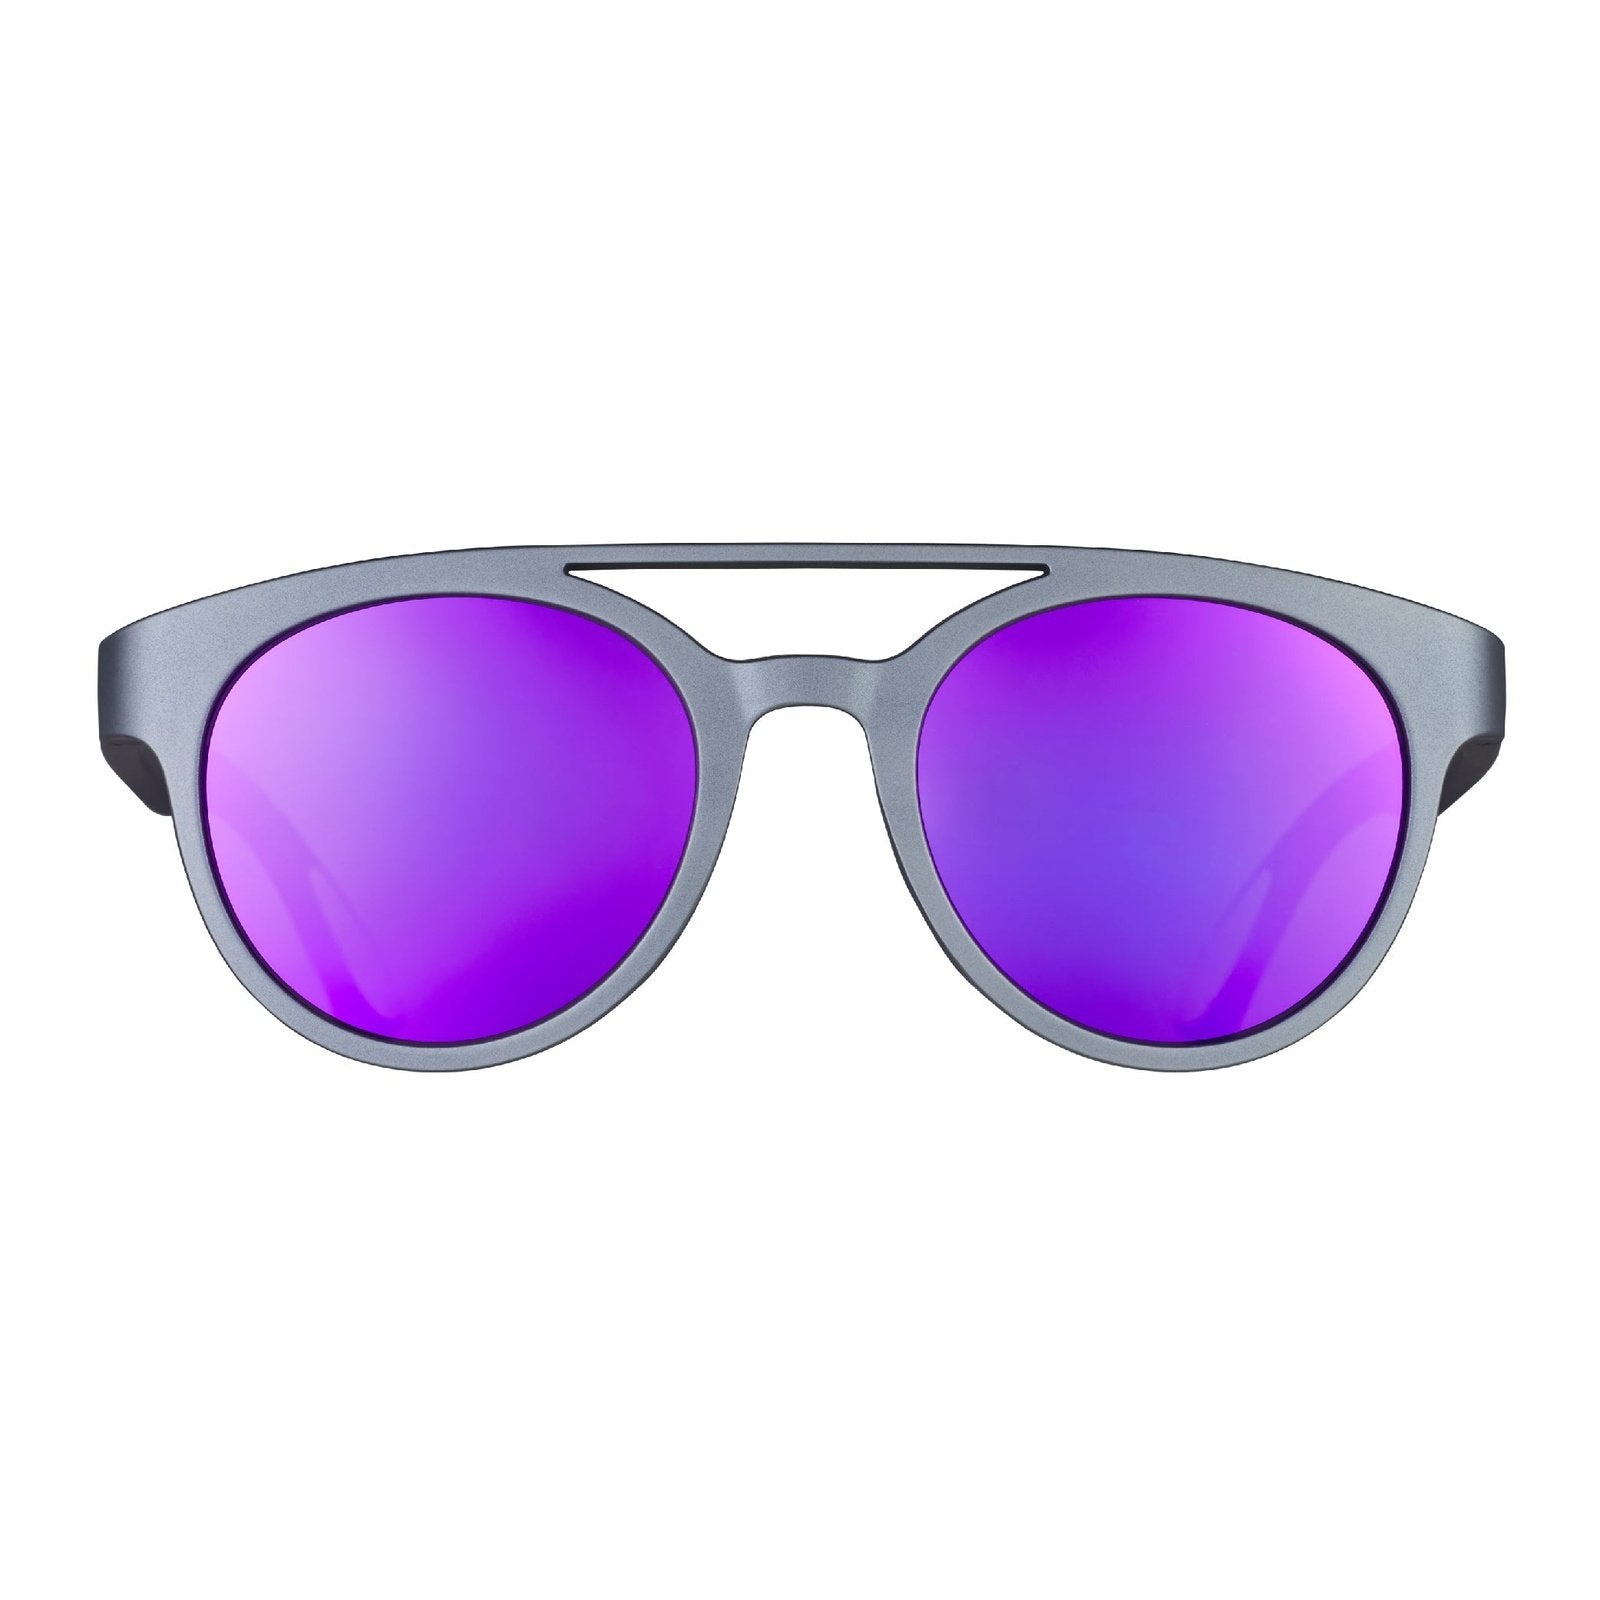 "The New Prospector” PHG Polarized Sunglasses Goodr